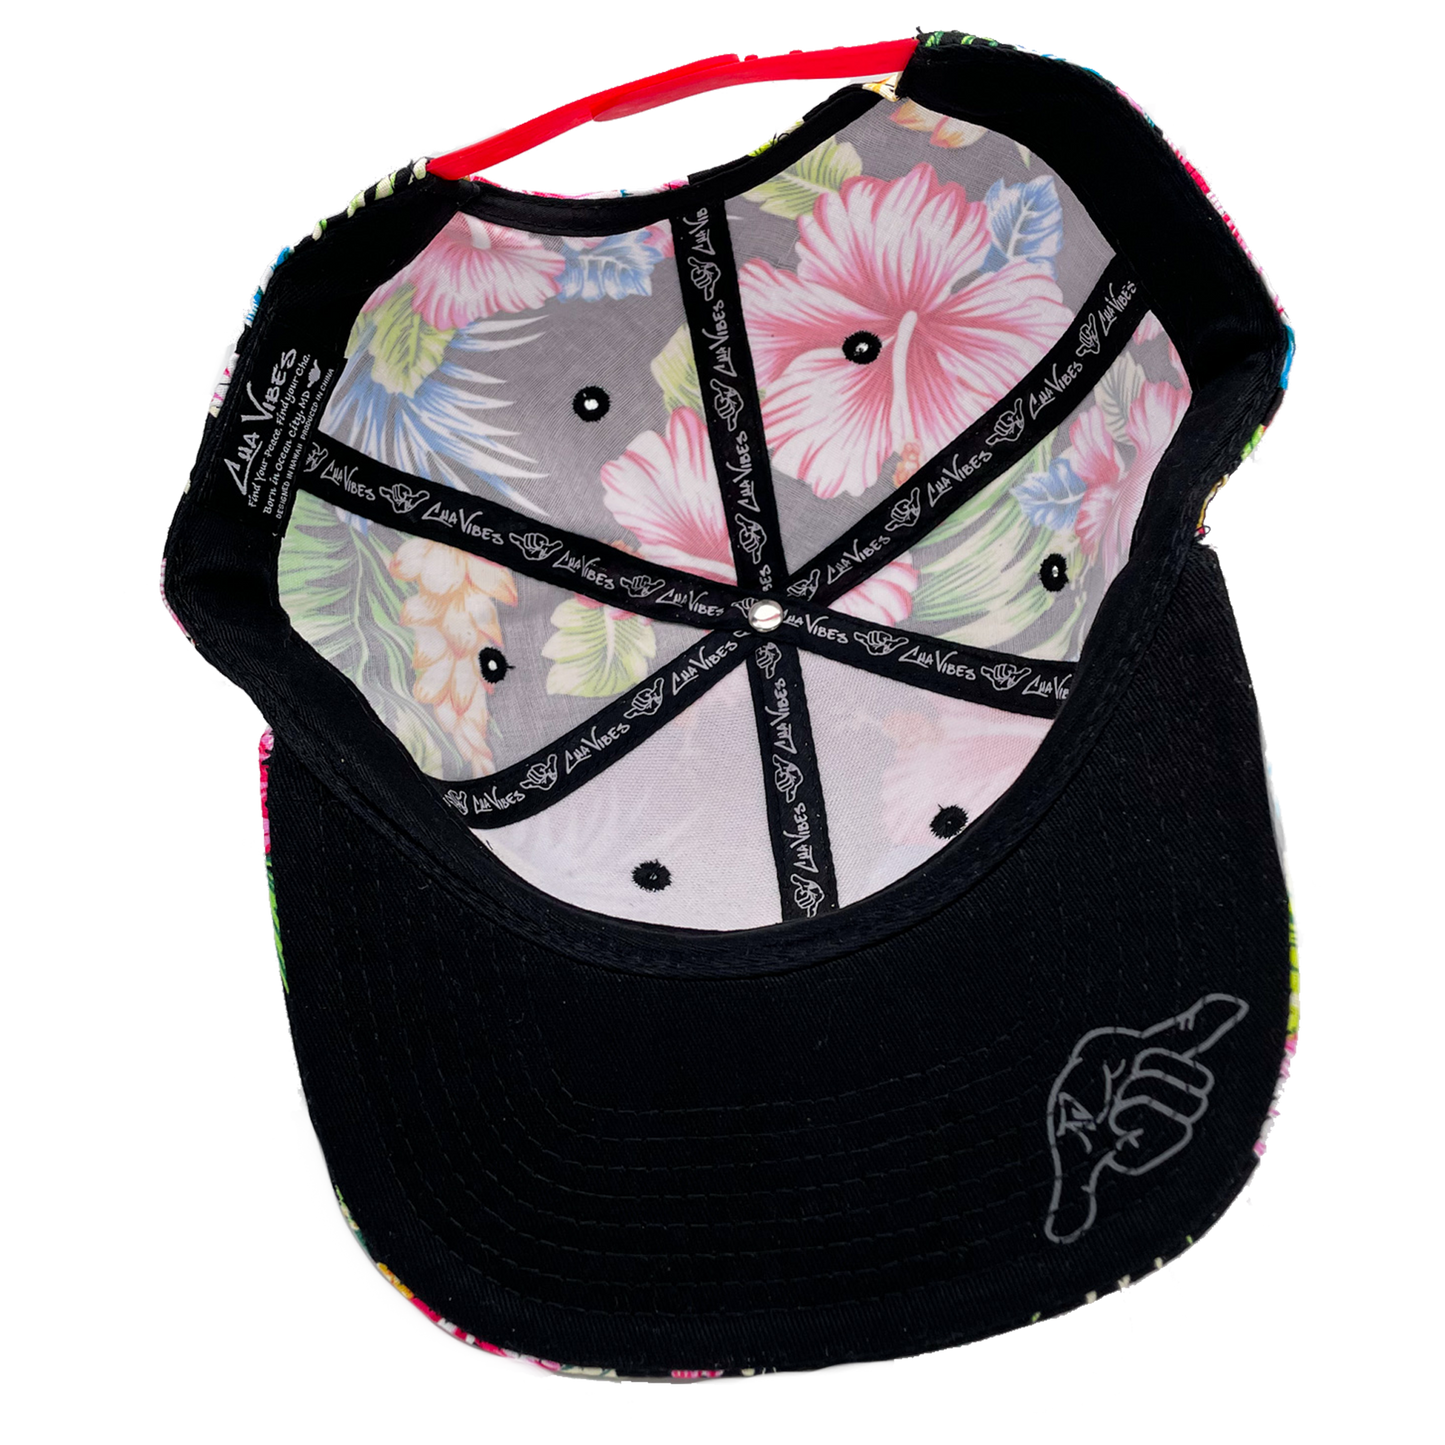 Black Floral Cap